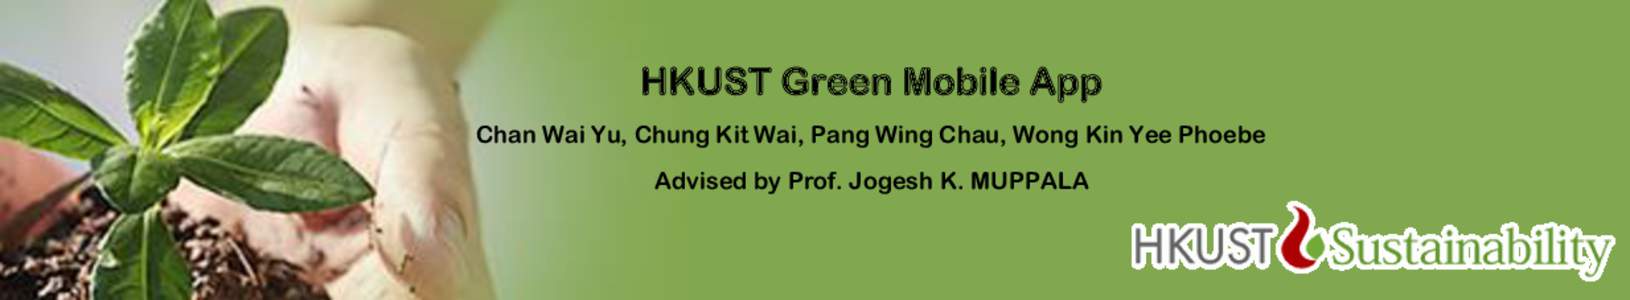 HKUST Green Mobile App Chan Wai Yu, Chung Kit Wai, Pang Wing Chau, Wong Kin Yee Phoebe Advised by Prof. Jogesh K. MUPPALA Background The HKUST Sustainability Unit aims to educate and